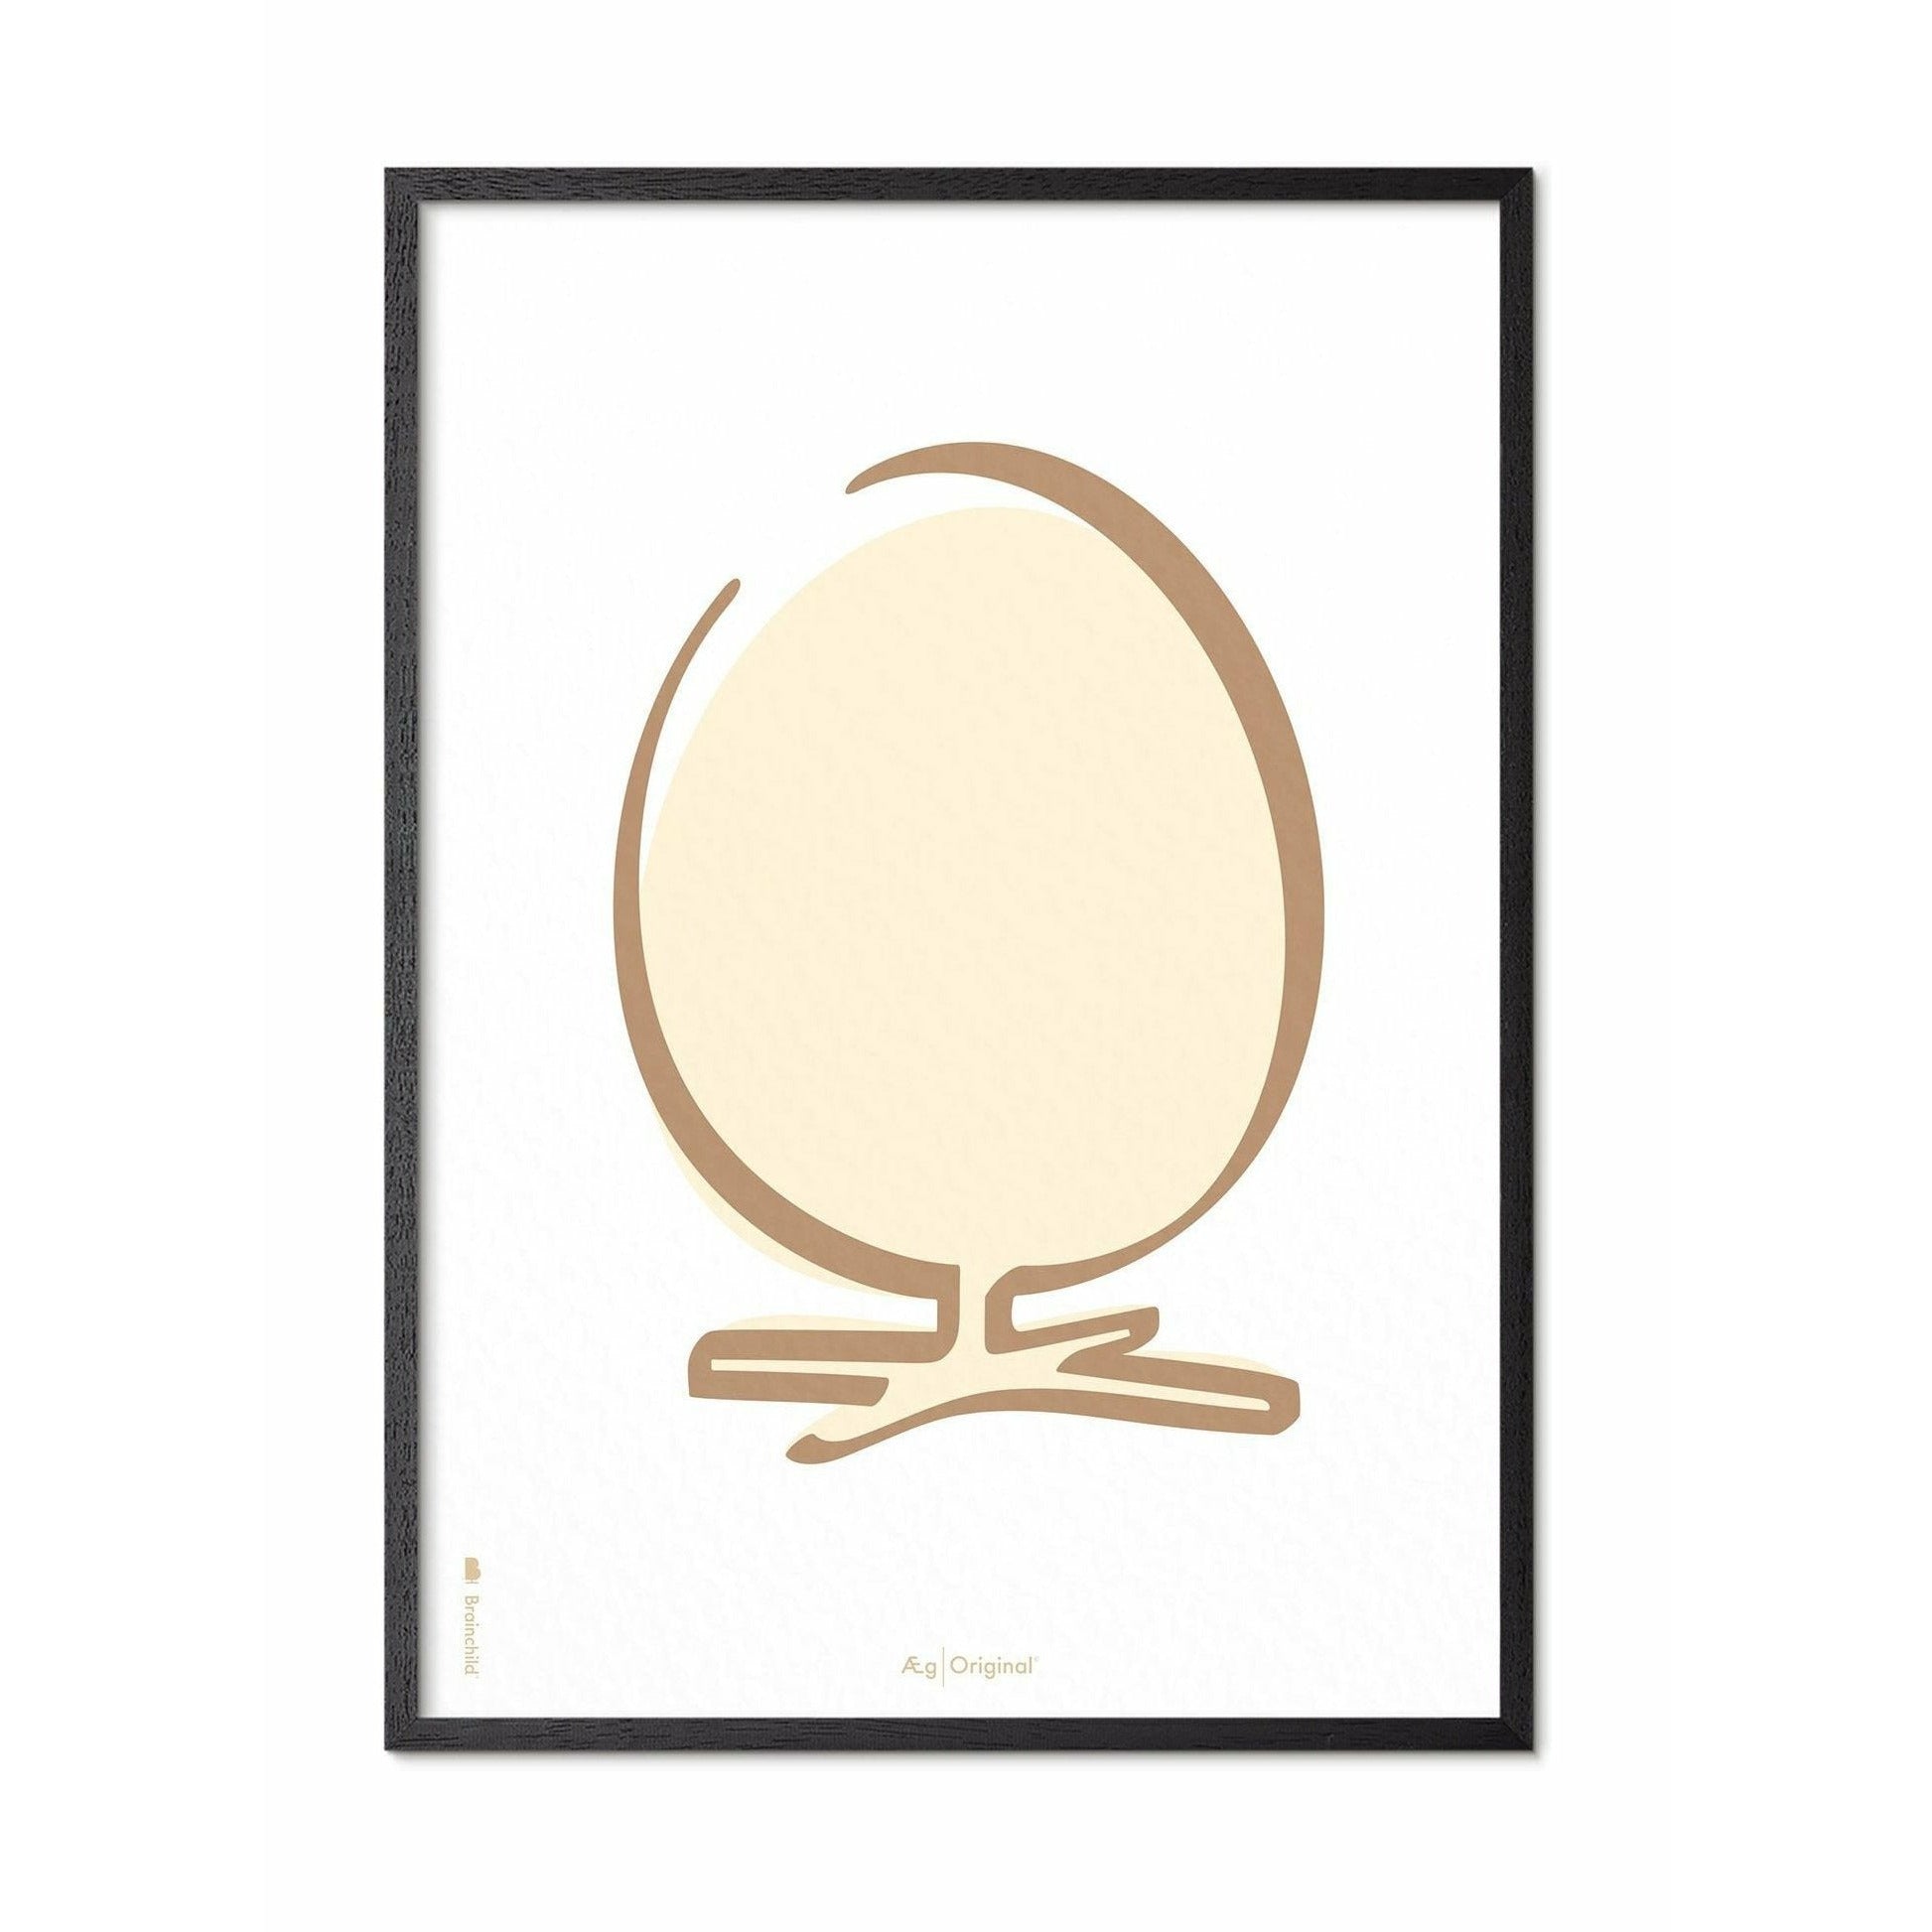 Póster de línea de huevo de creación, marco en madera lacada negra 50x70 cm, fondo blanco